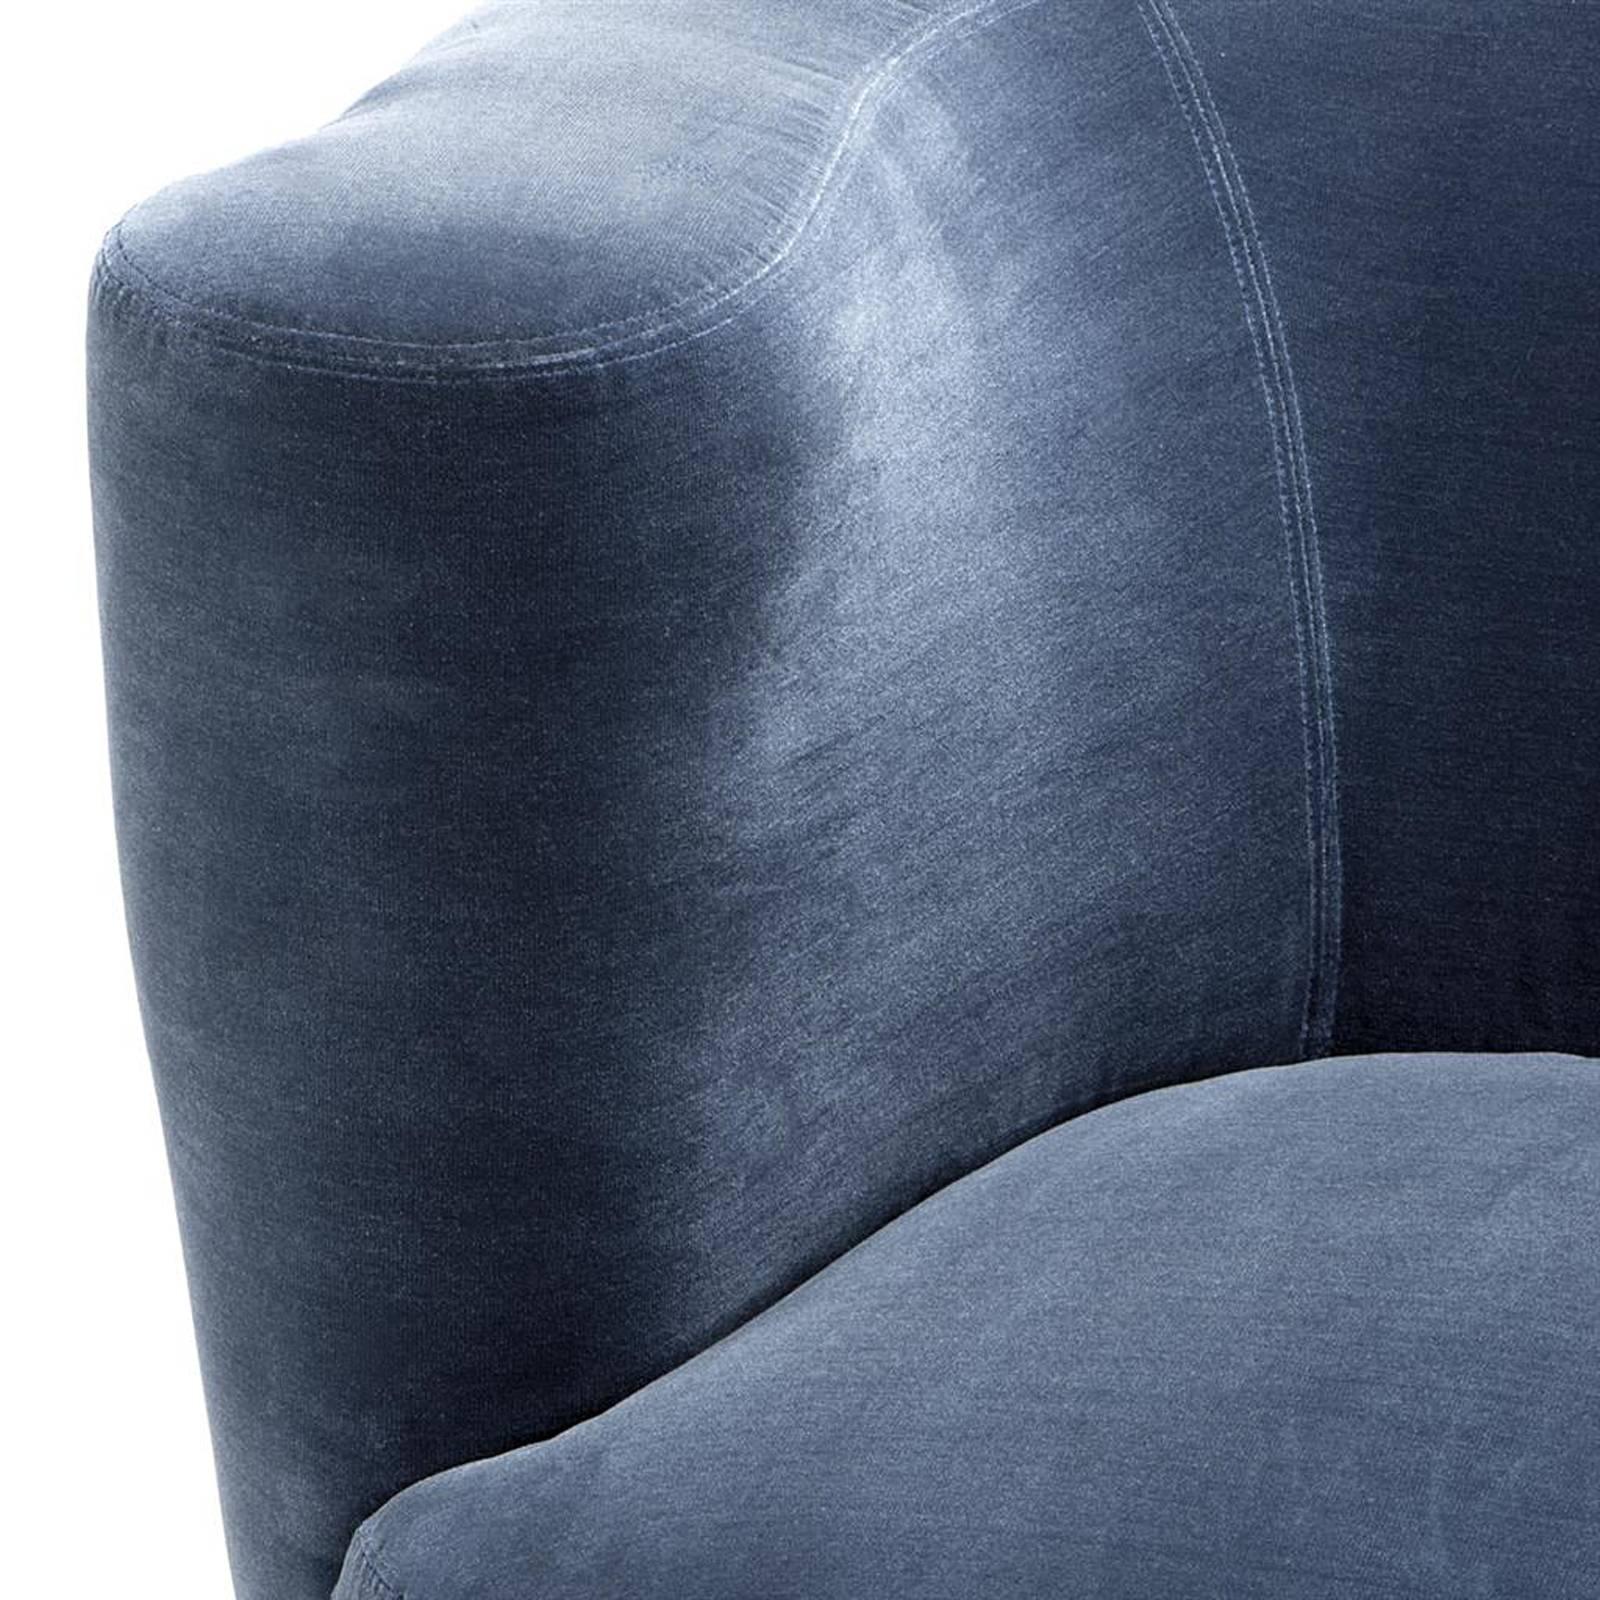 Chinese Lounge Faded Blue Armchair Velvet Upholstered